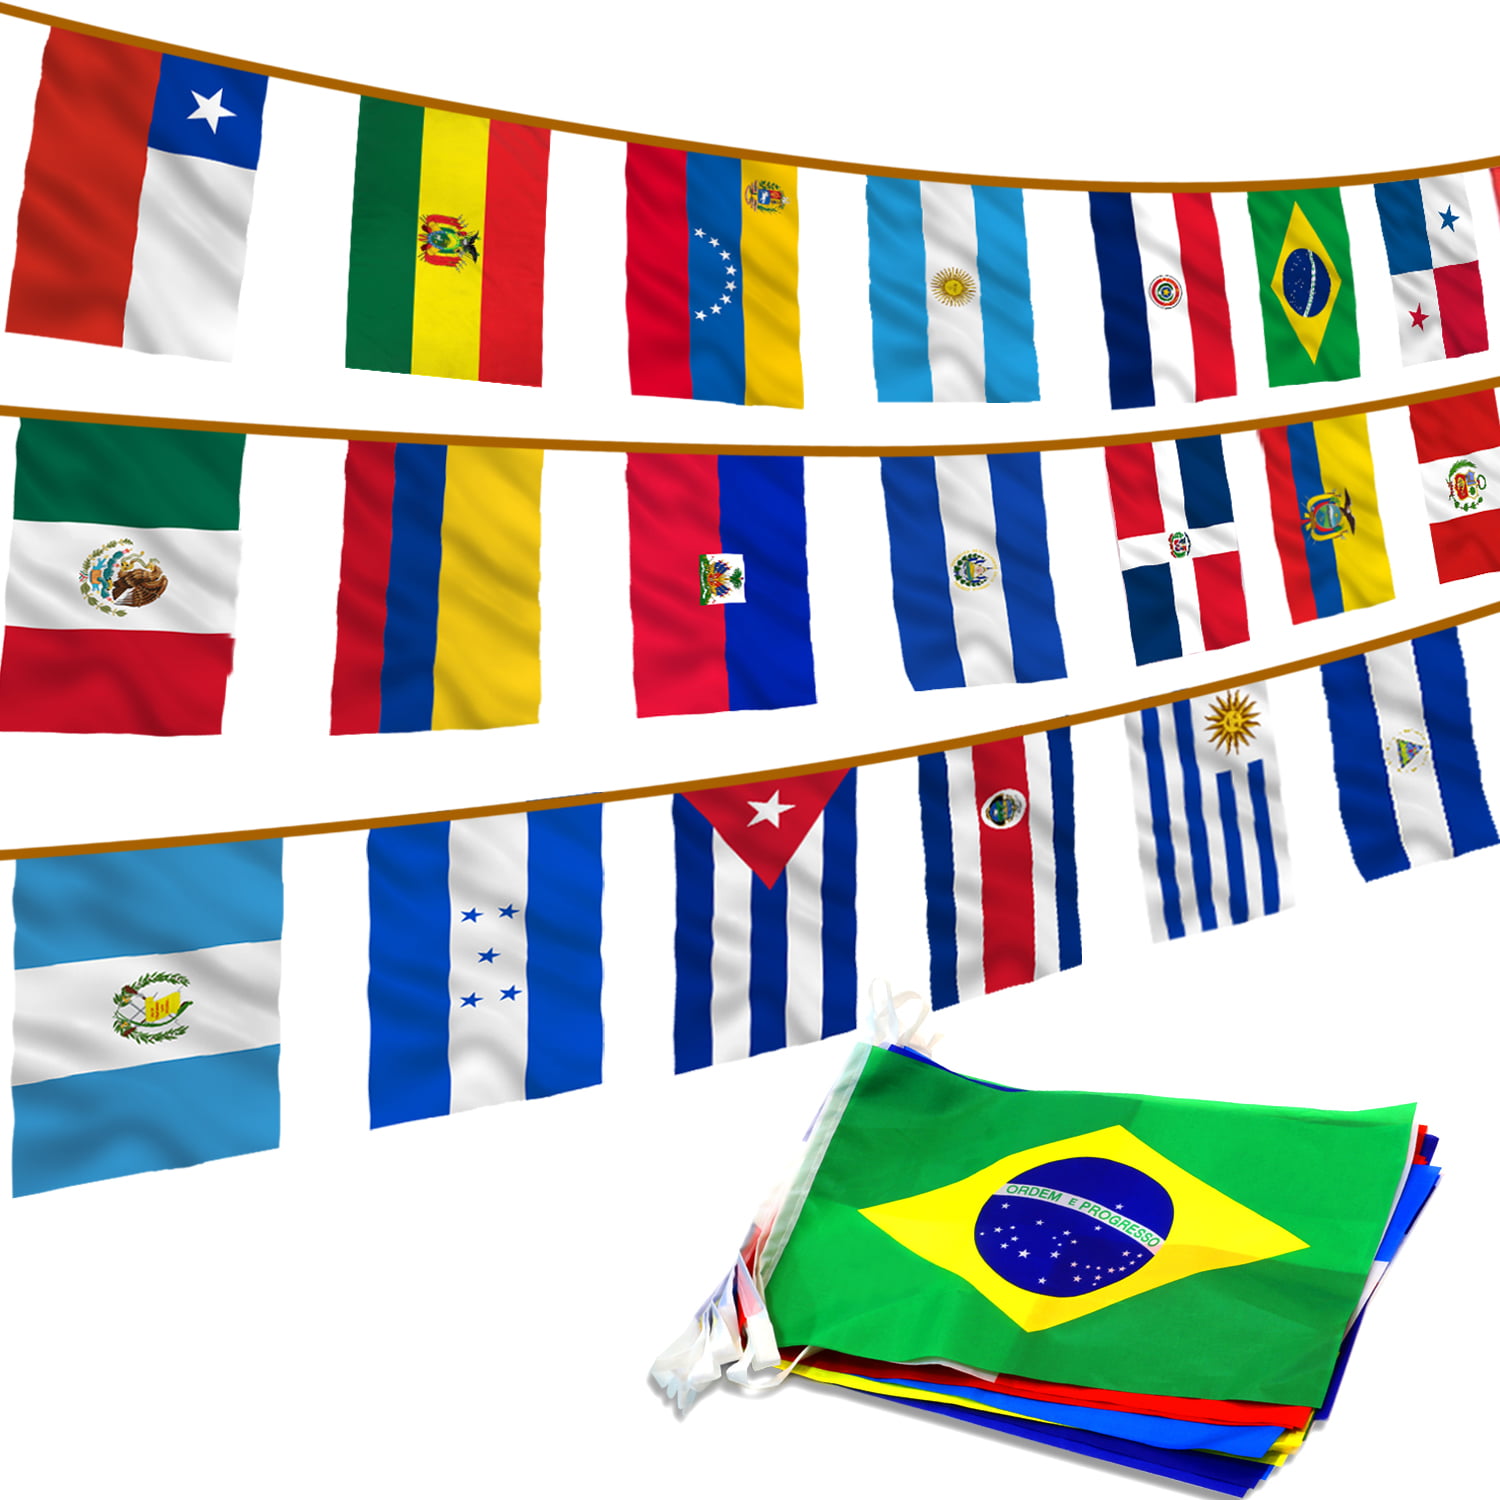 South America 100% Polyester With Eyelets Venezuela 8 Stars Flag 5 x 3 FT